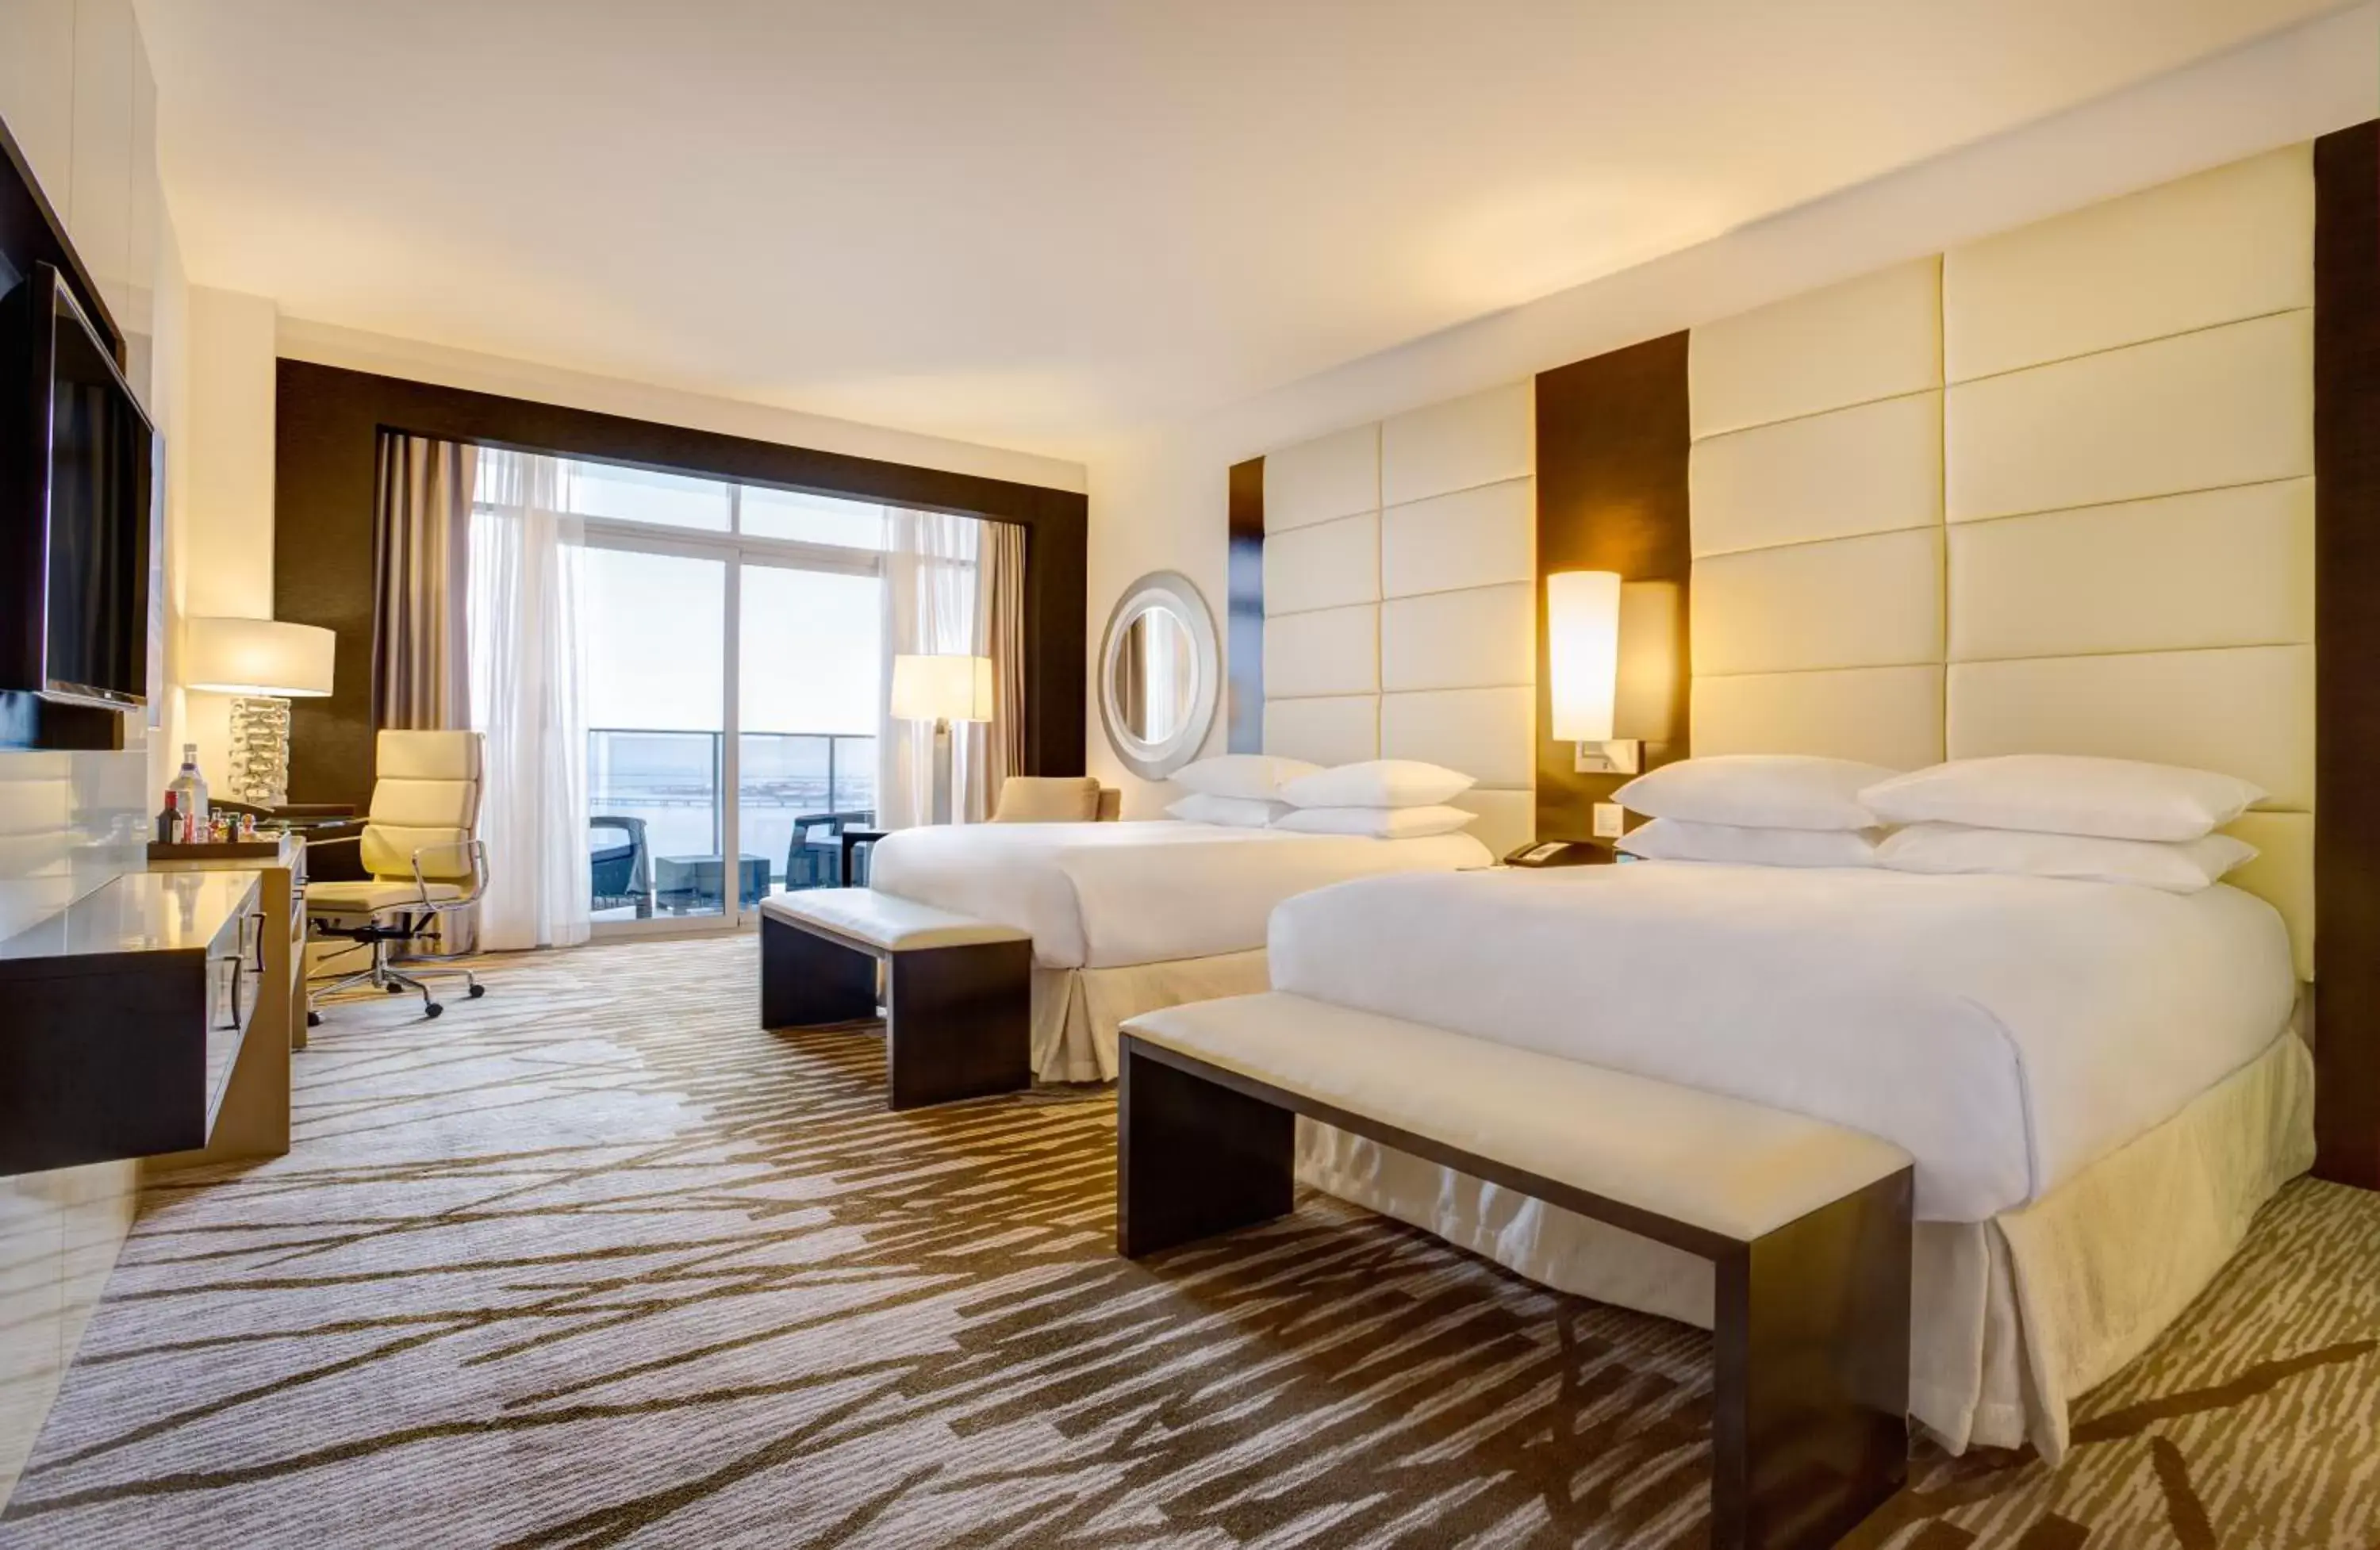 Bedroom in Hilton Panama